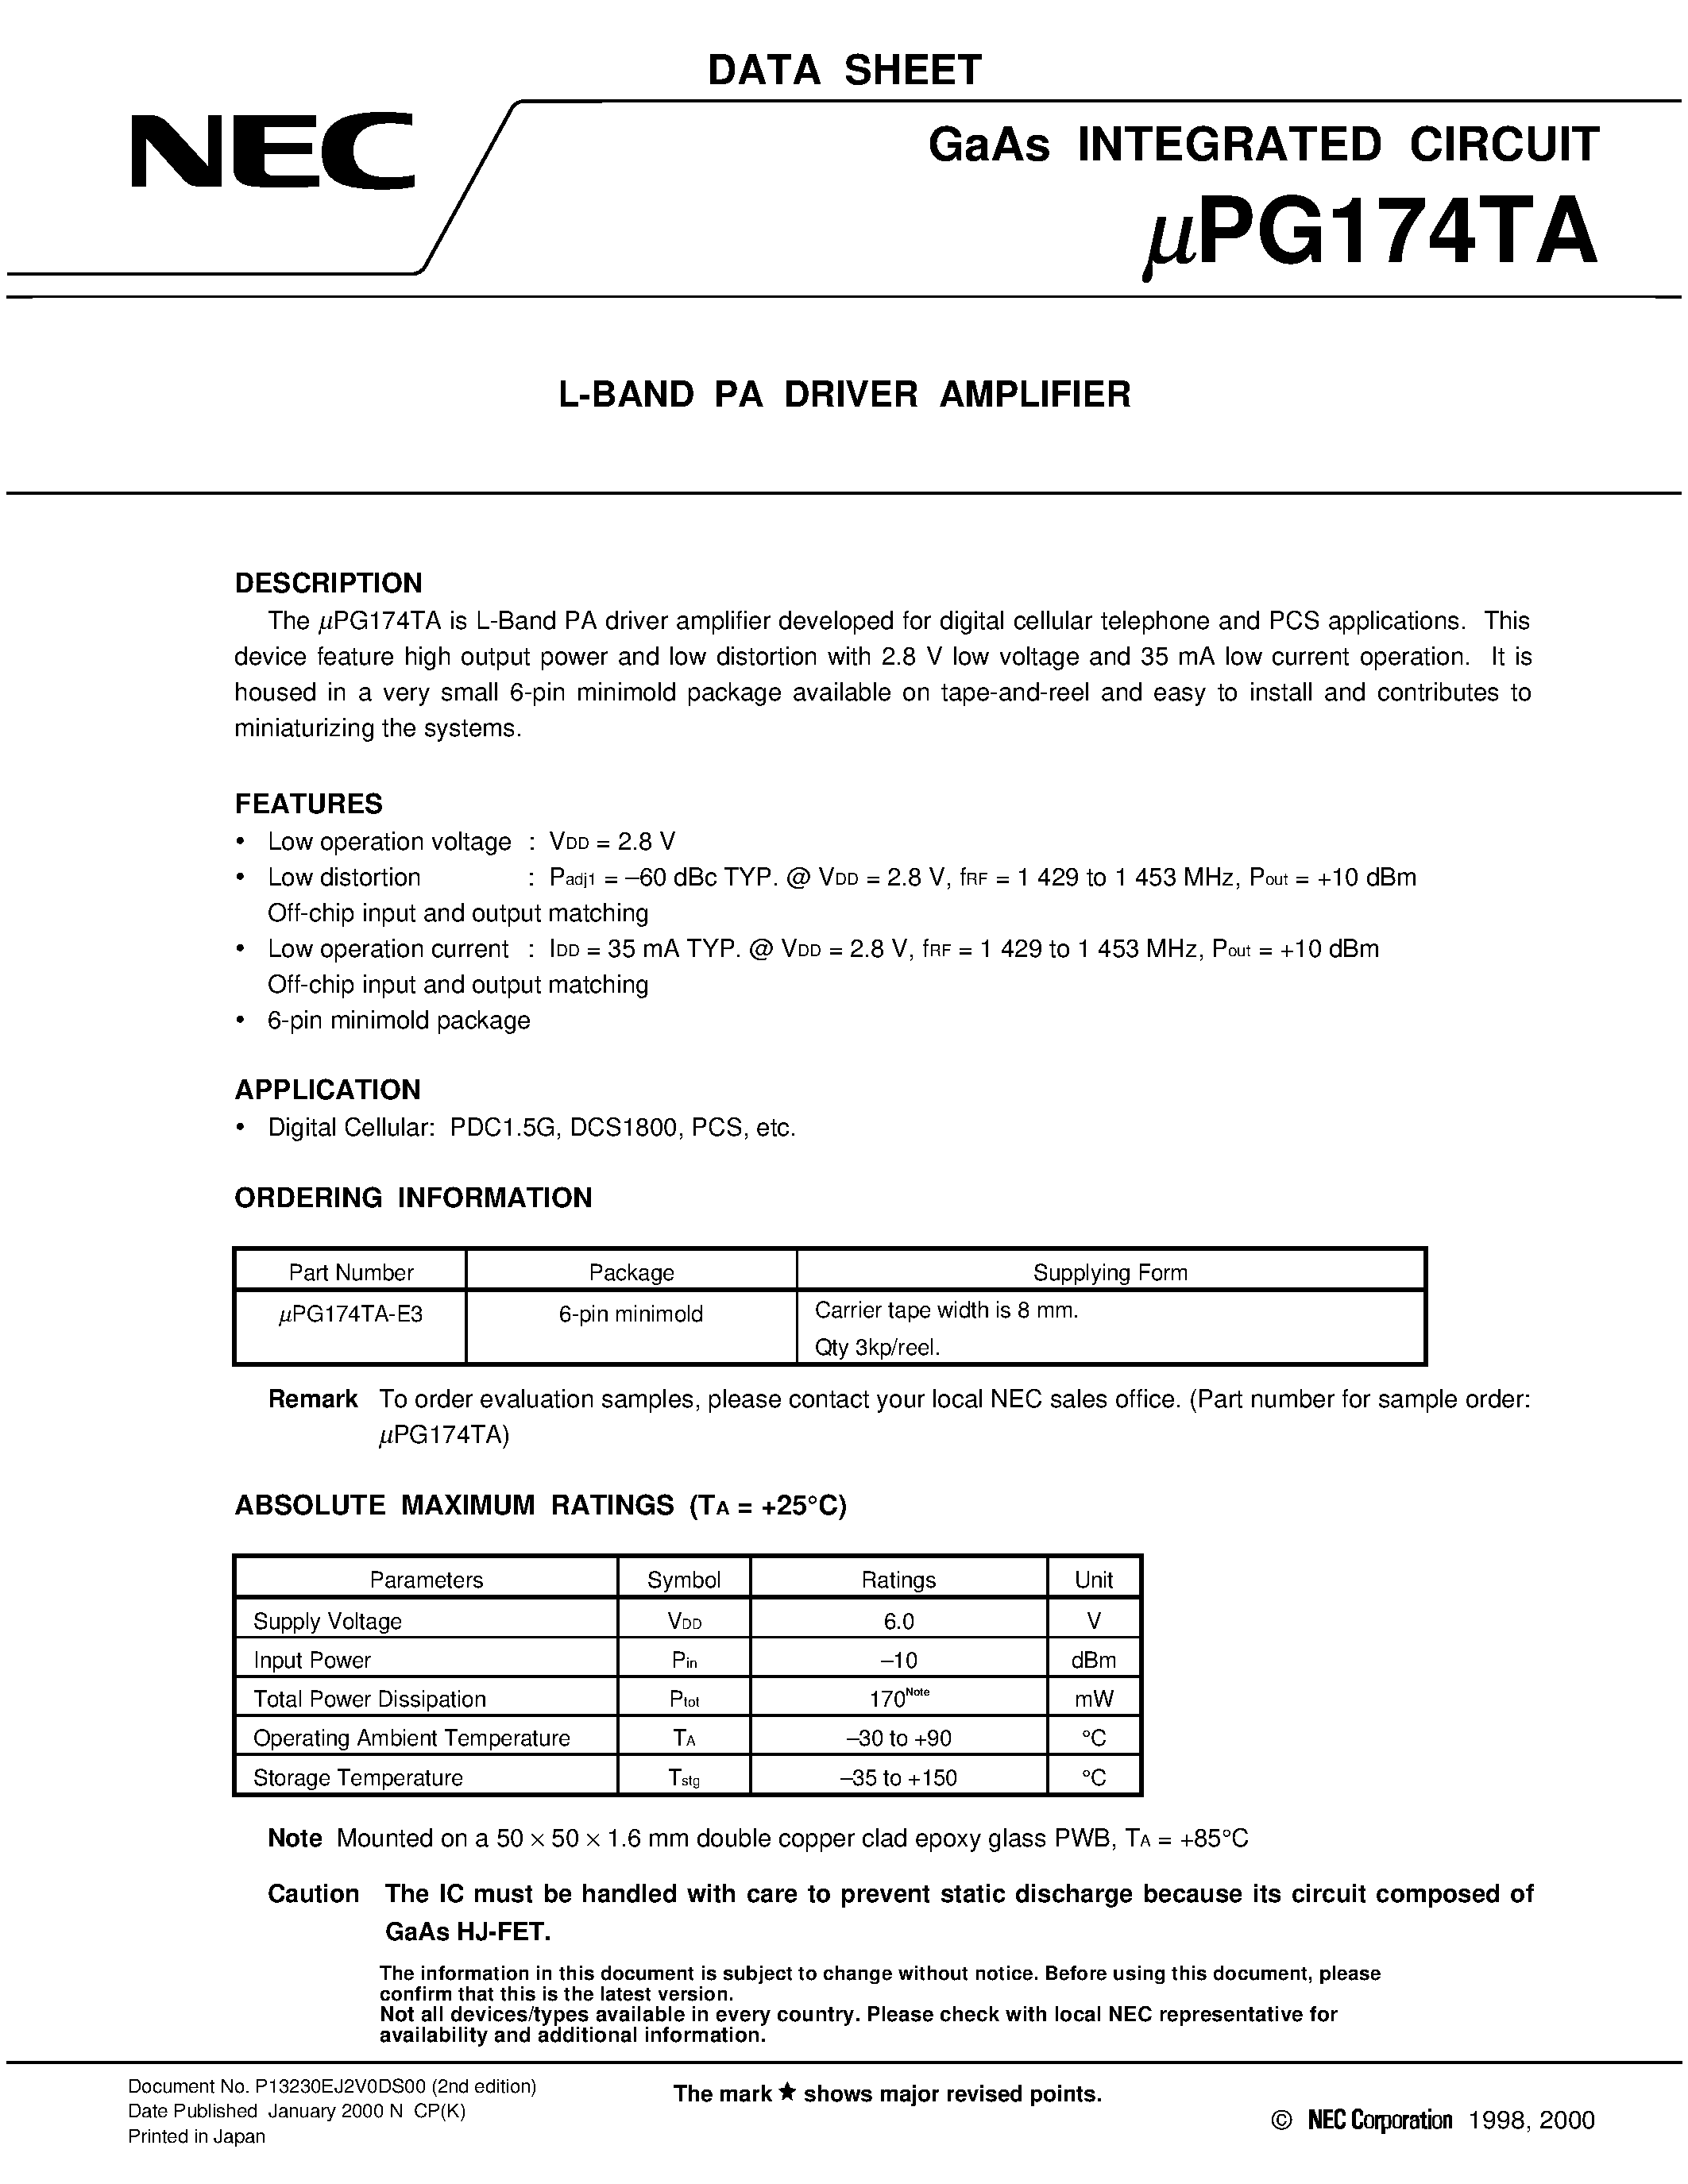 Datasheet UPG174TA - L-BAND PA DRIVER AMPLIFIER page 1